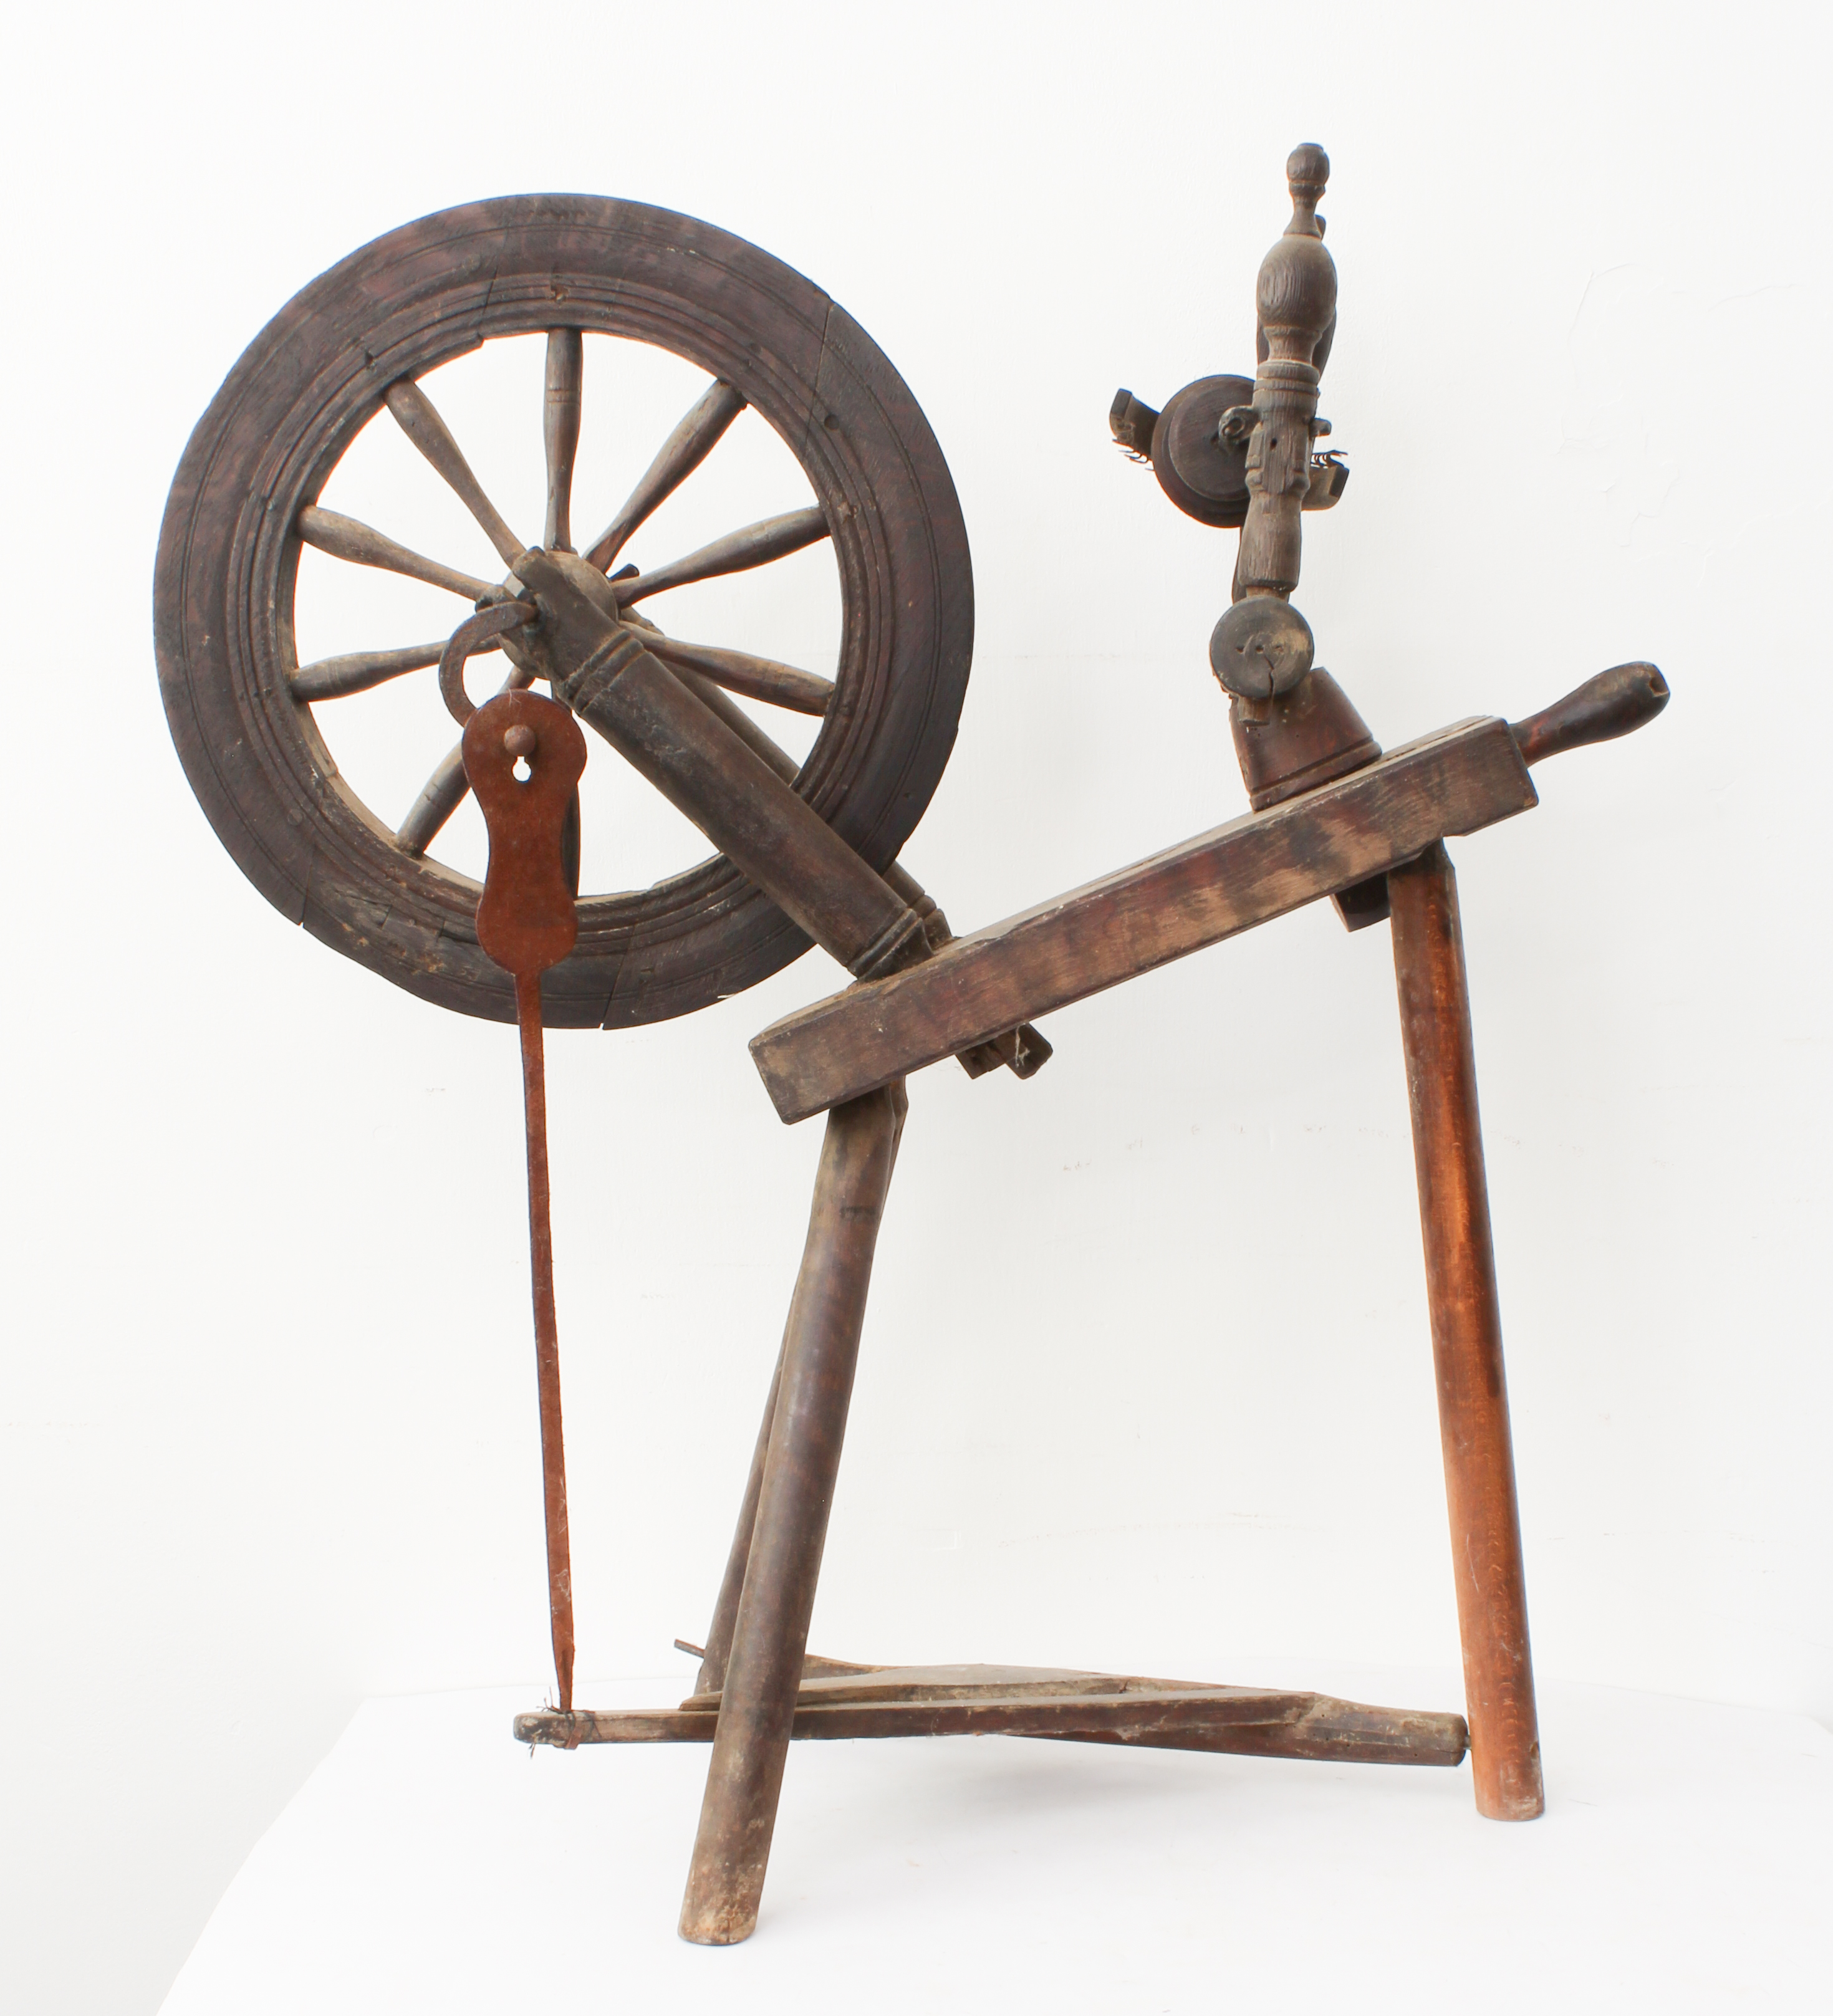 Two antique spinning wheels - some missing parts. - Bild 4 aus 5